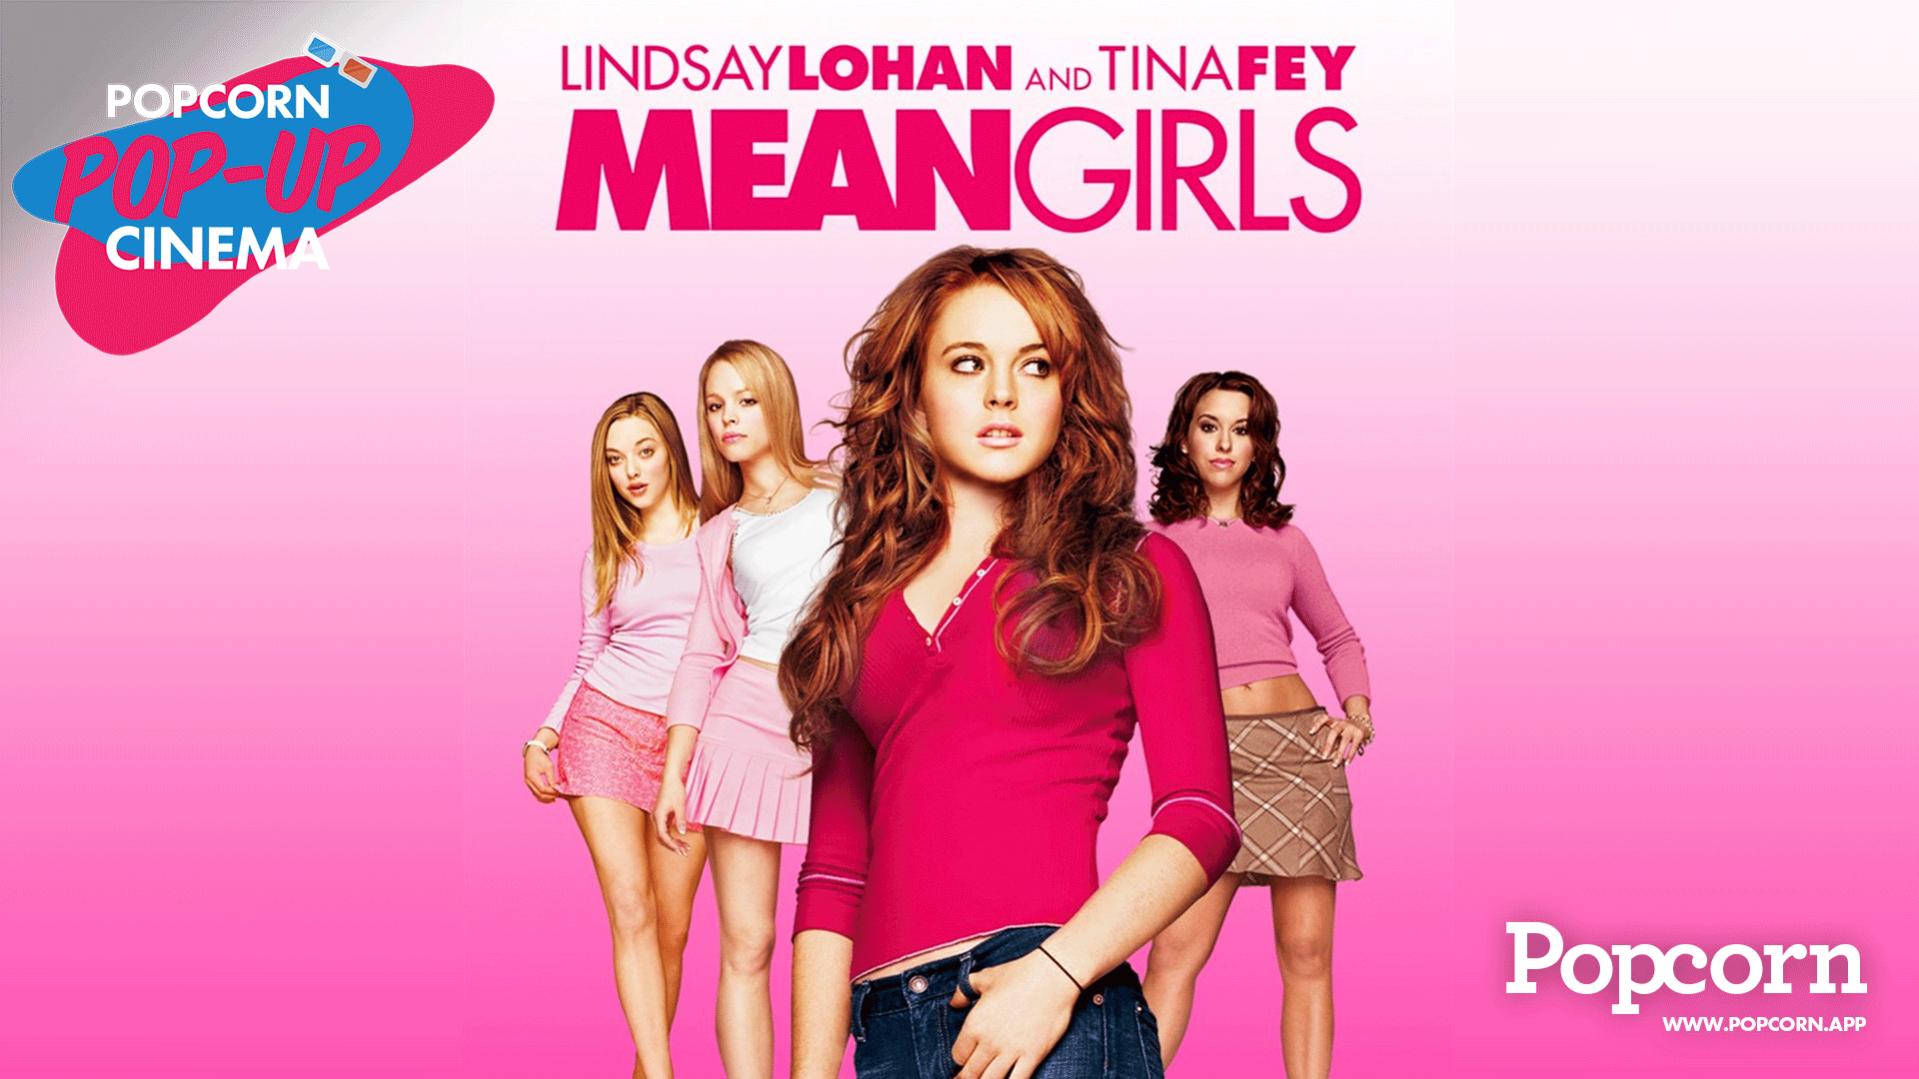 Mean Girls Pop-Up Cinema by Popcorn App